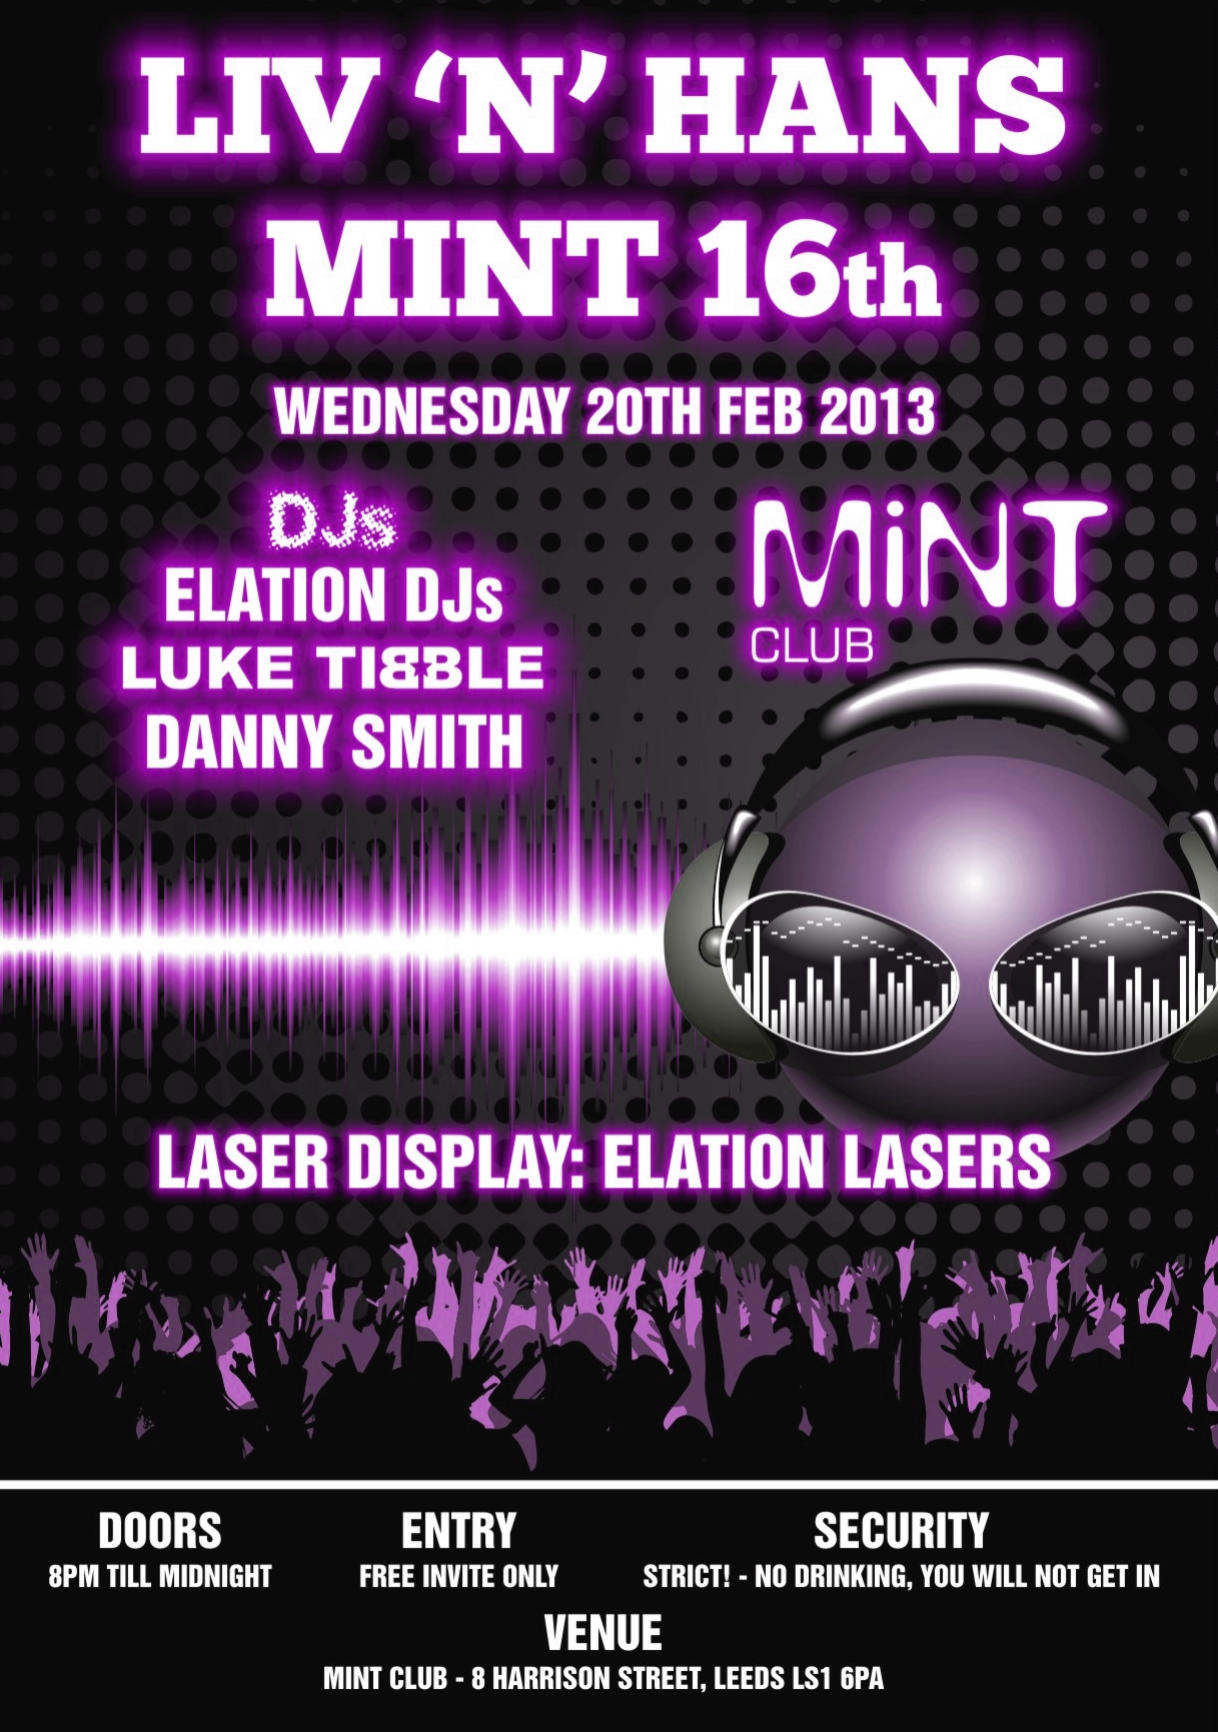 Liv & Hans Mint 16th - Mint Club Leeds - Elation DJs - Luke Tibble - Danny Smith